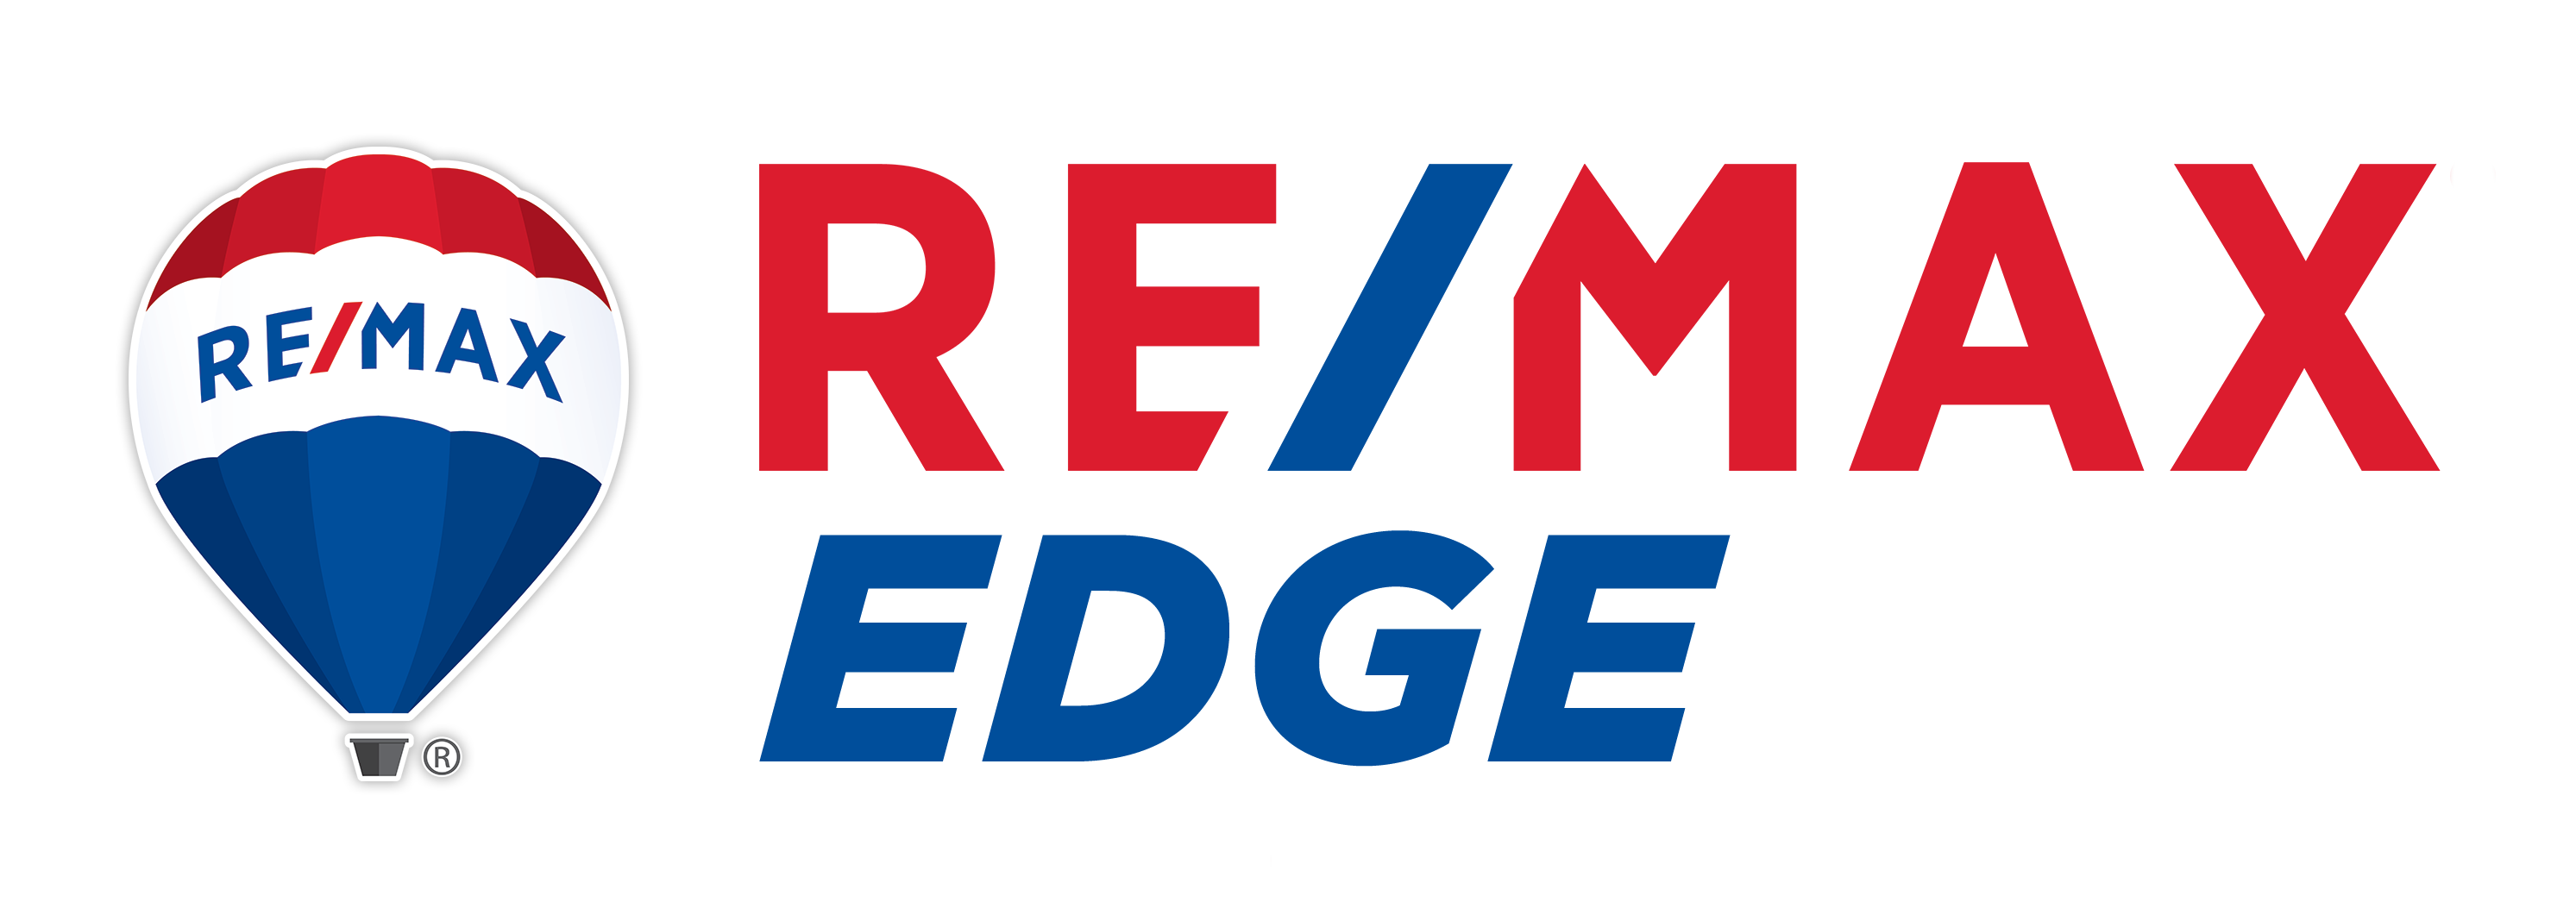 remax edge logo large with balloon DeGrande